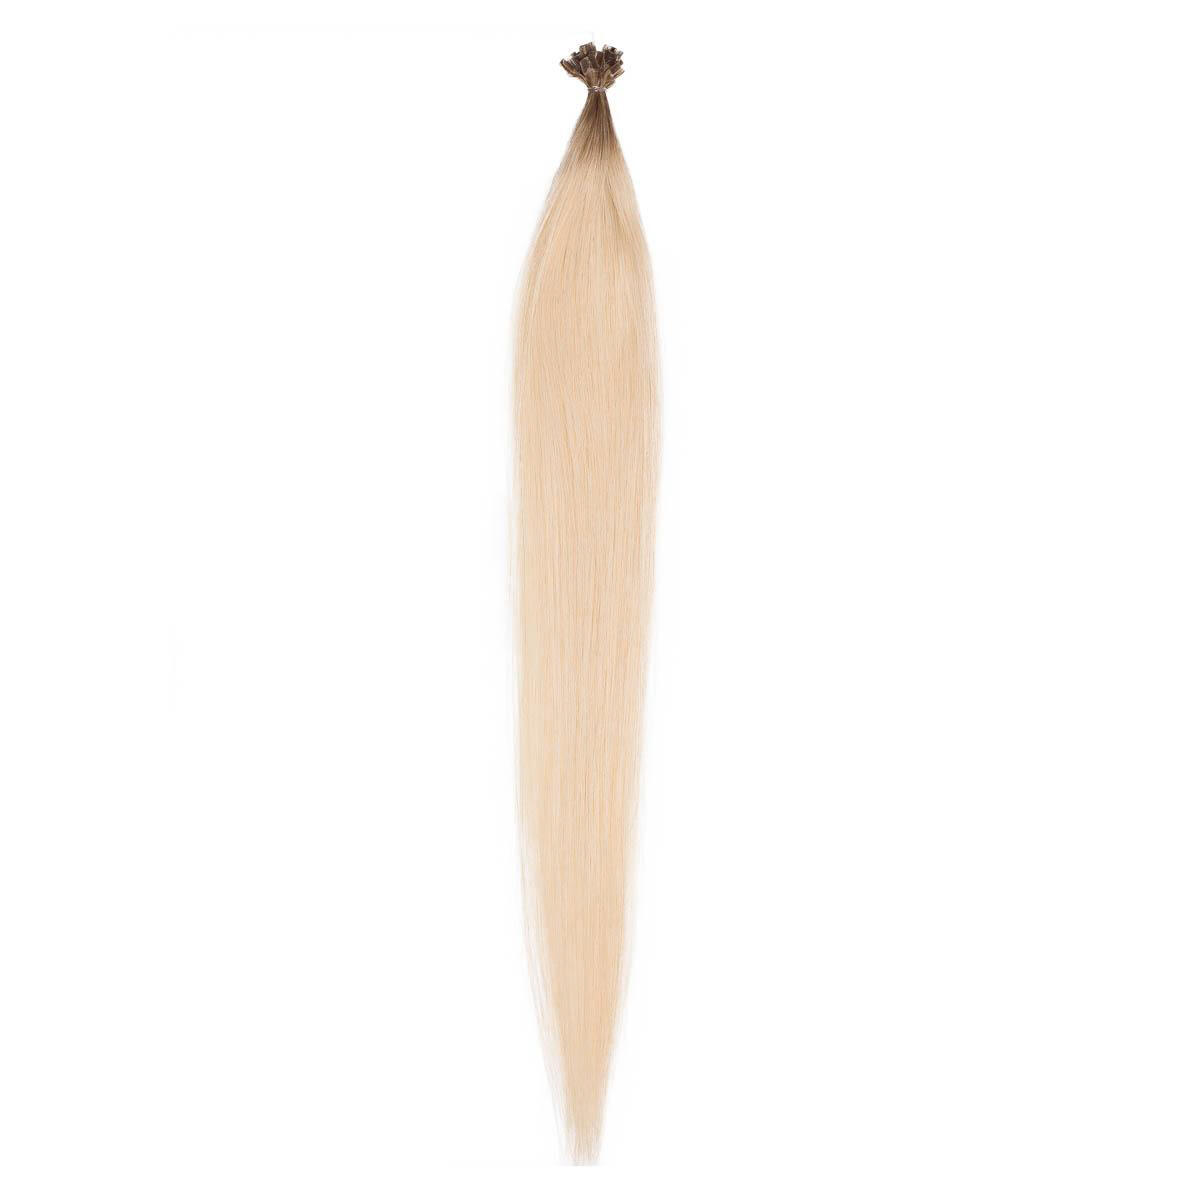 Nail Hair Original R7.3/8.0 Cendre Golden Blonde Root 40 cm